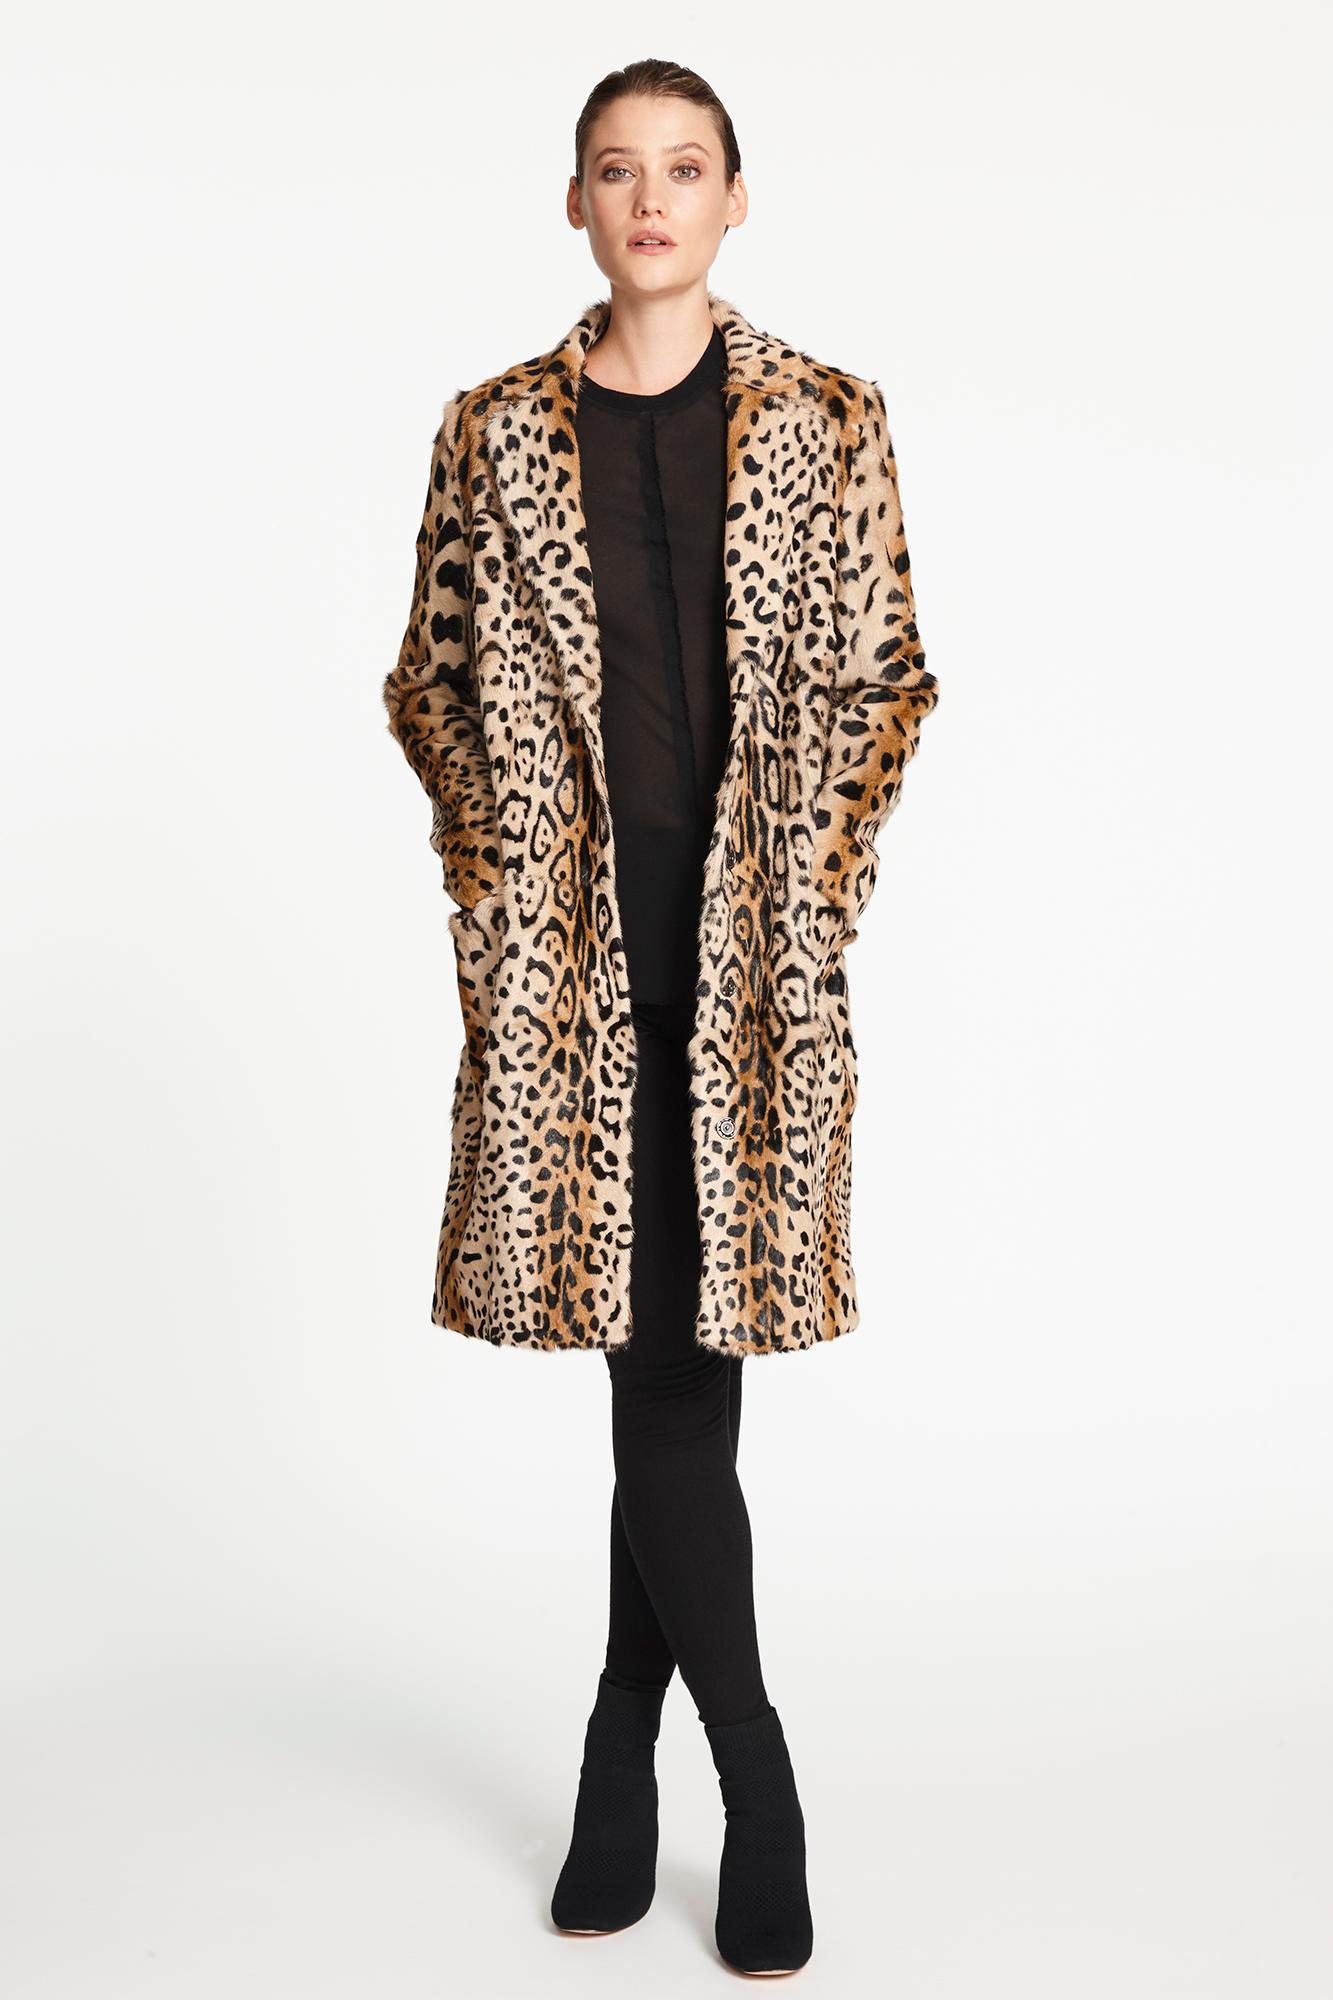 Verheyen London Leopard Print Coat in Red Ruby Goat Hair Fur UK 12 - Brand New  3